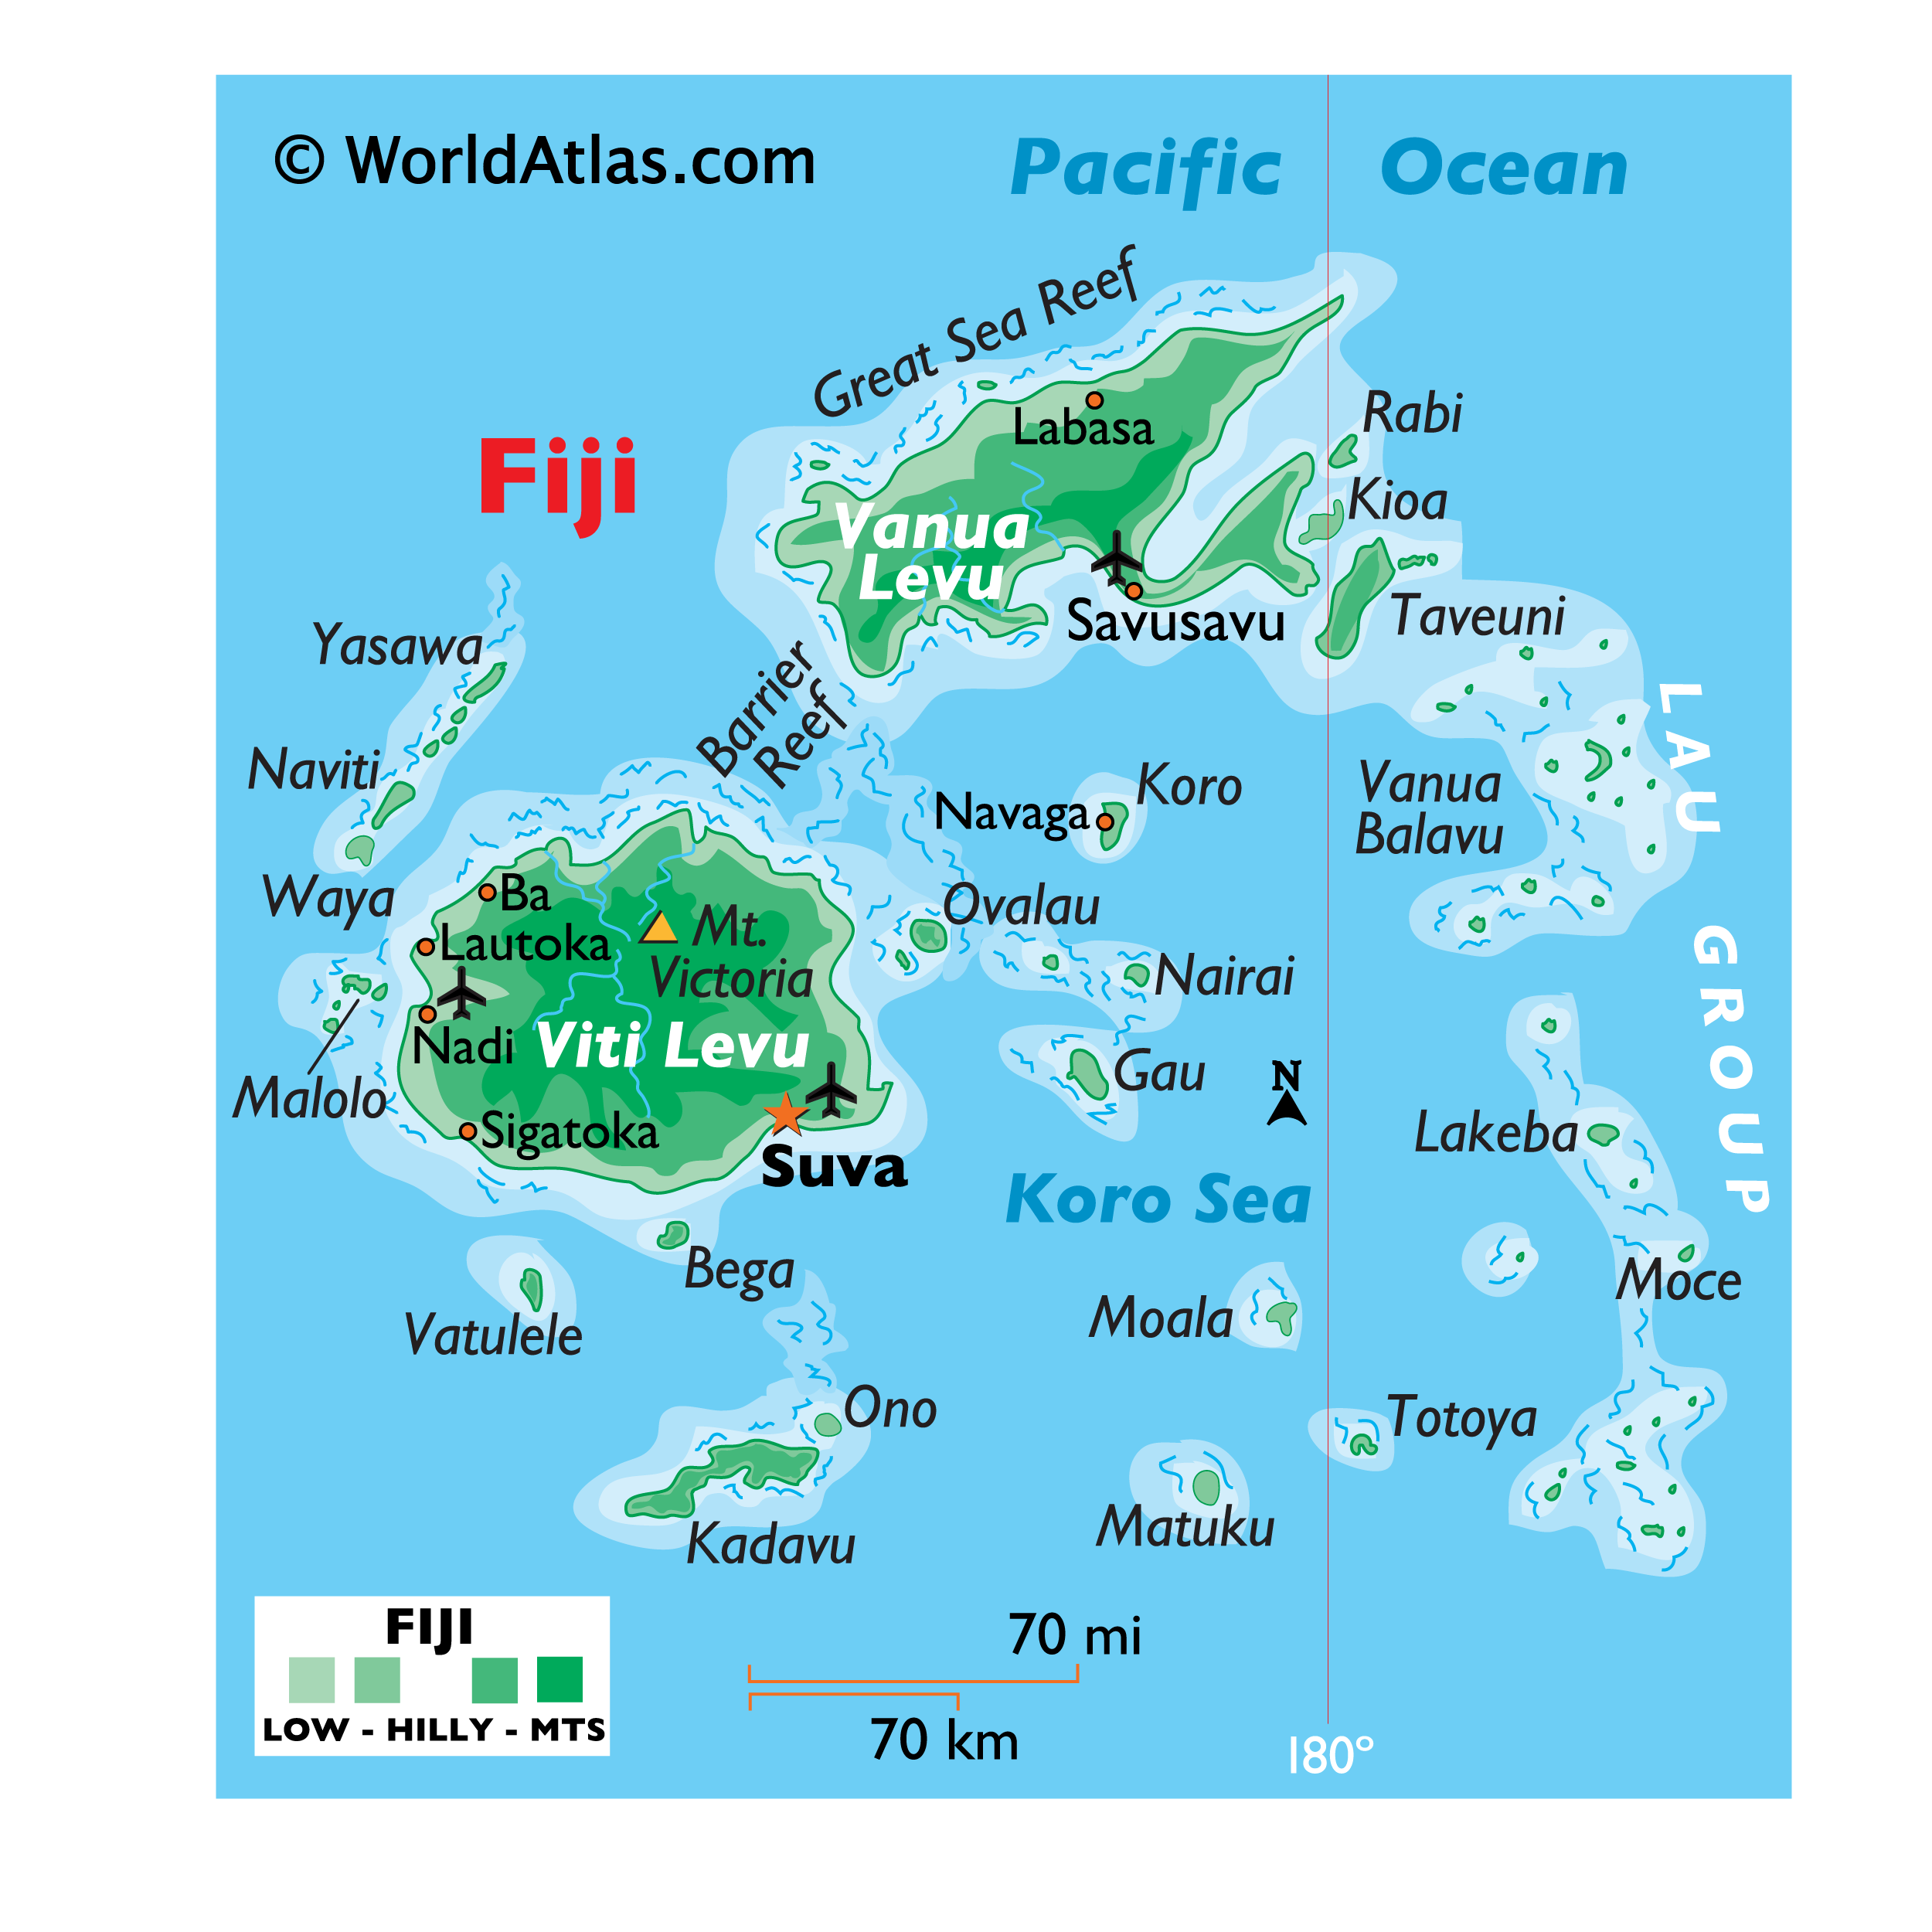 Where is Fiji located?